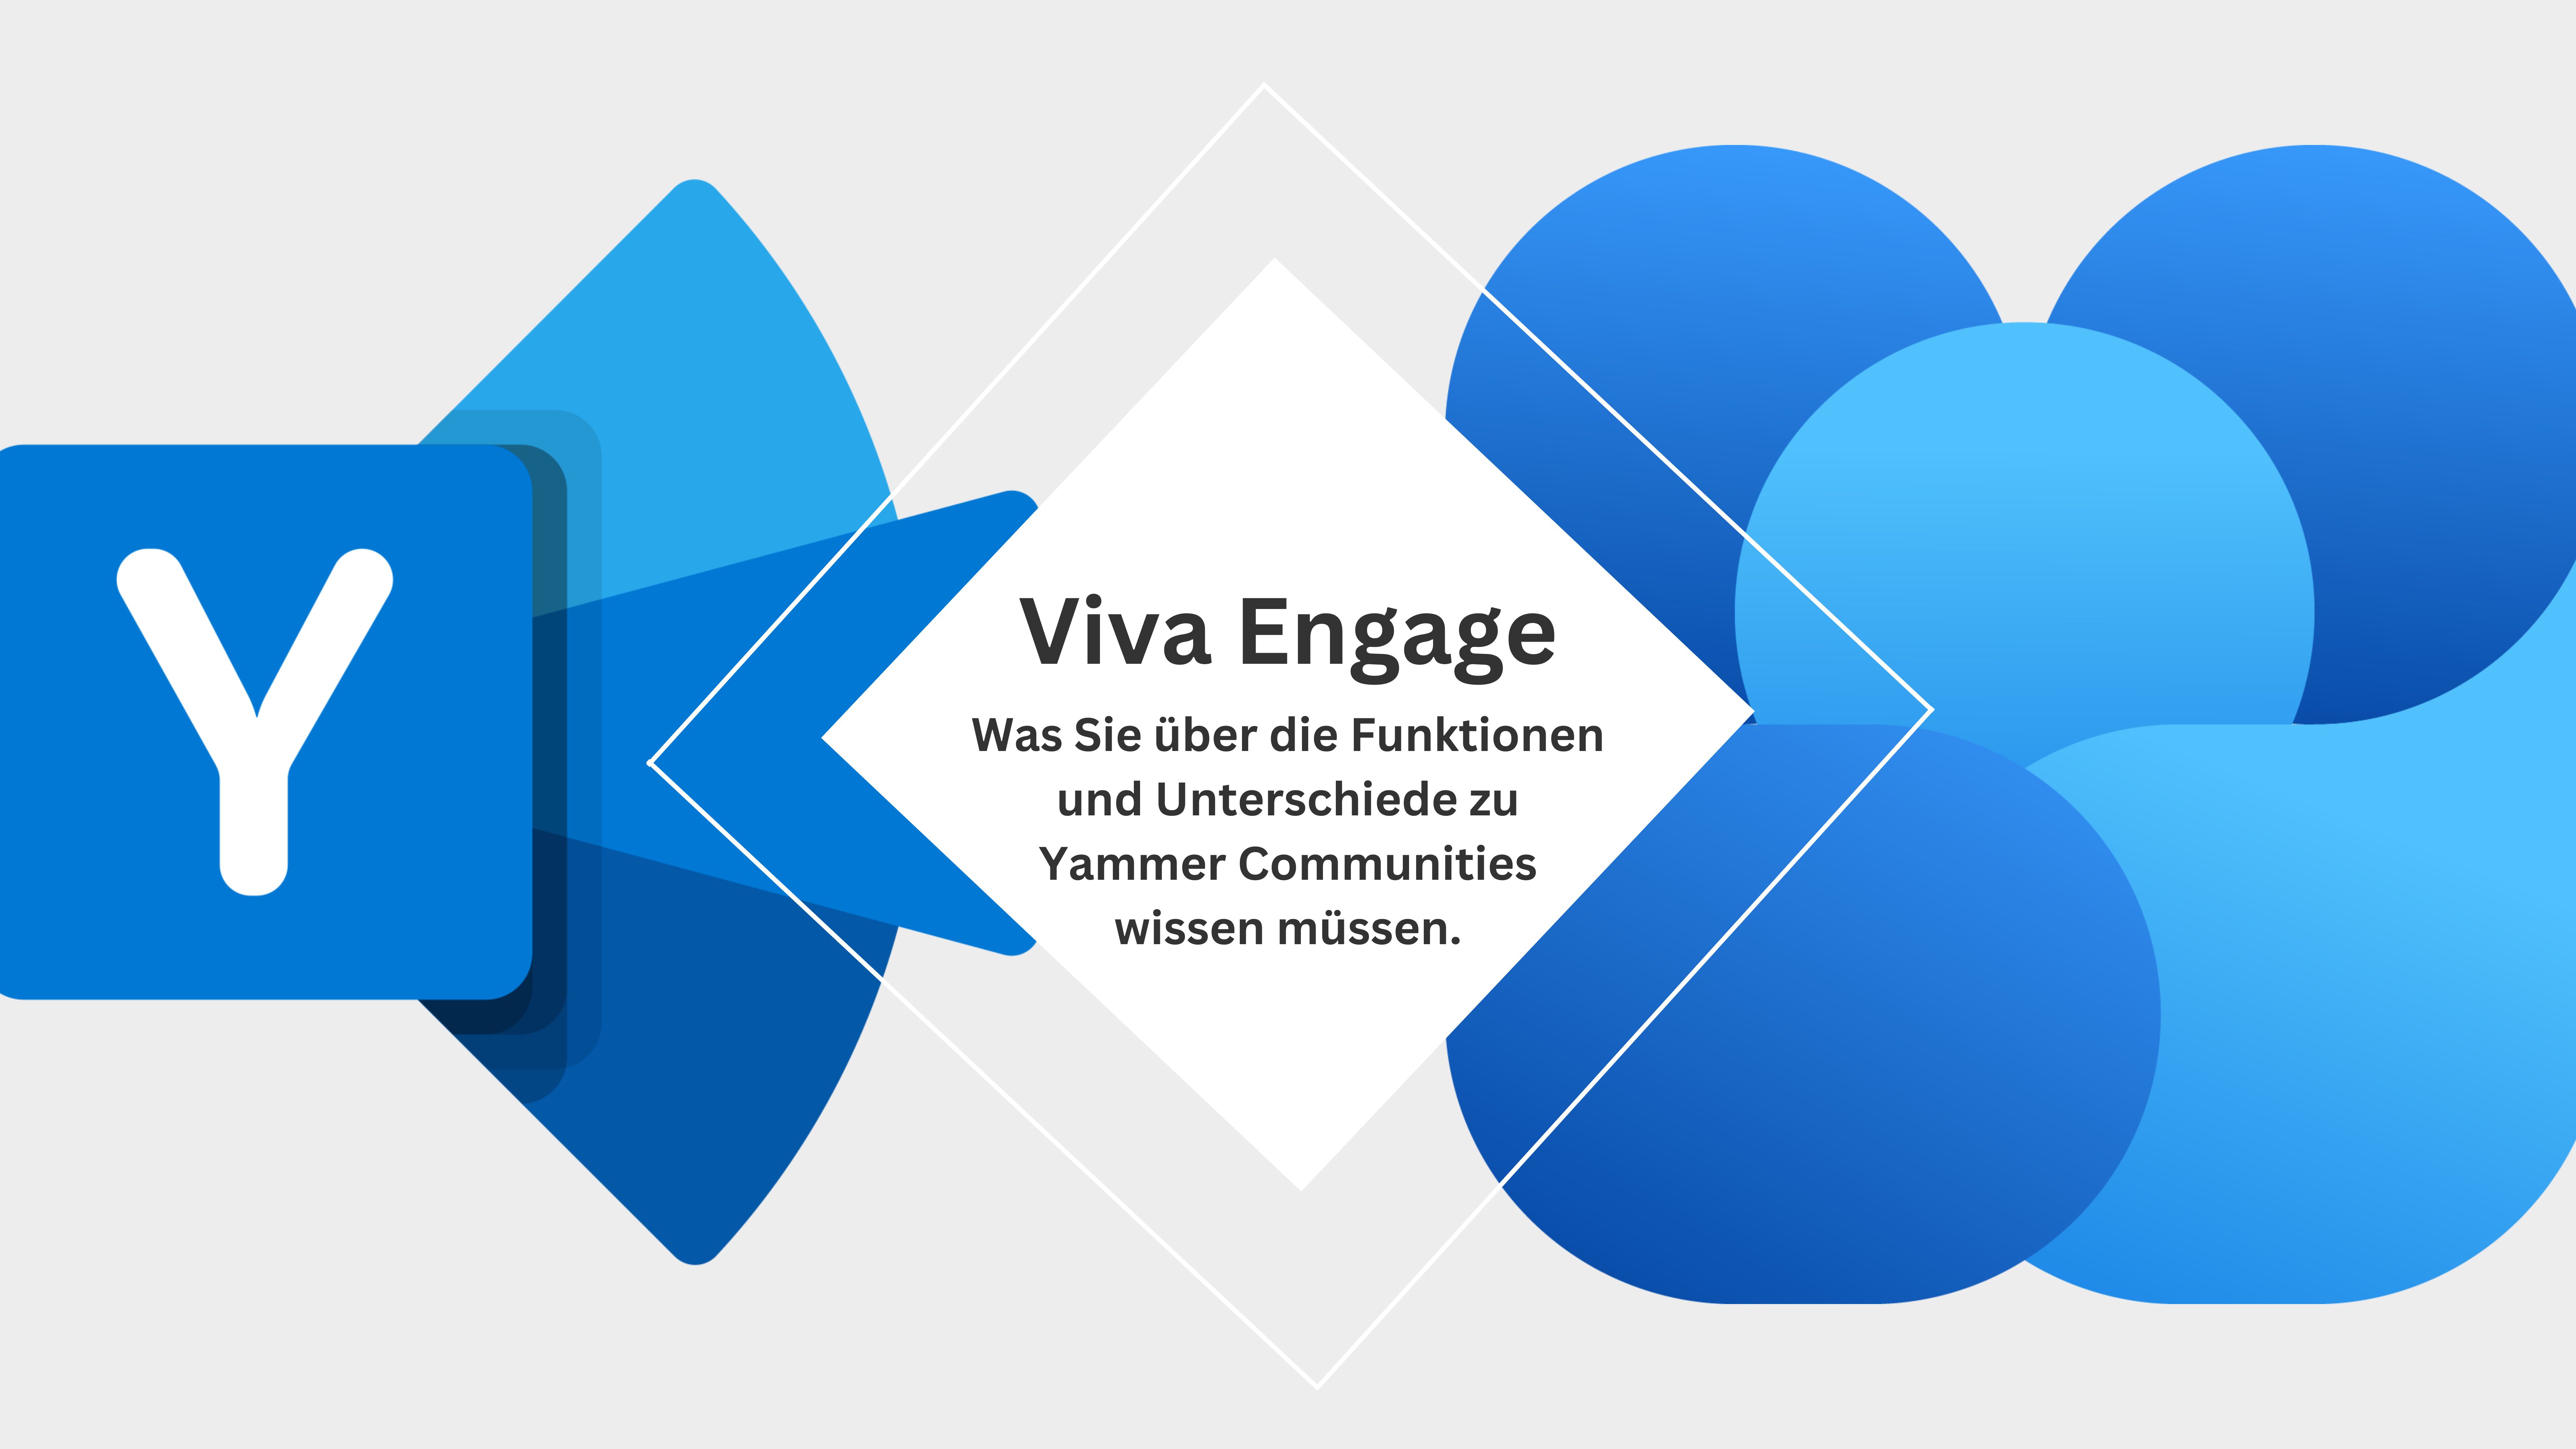 Viva Engage vs. Yammer Communities